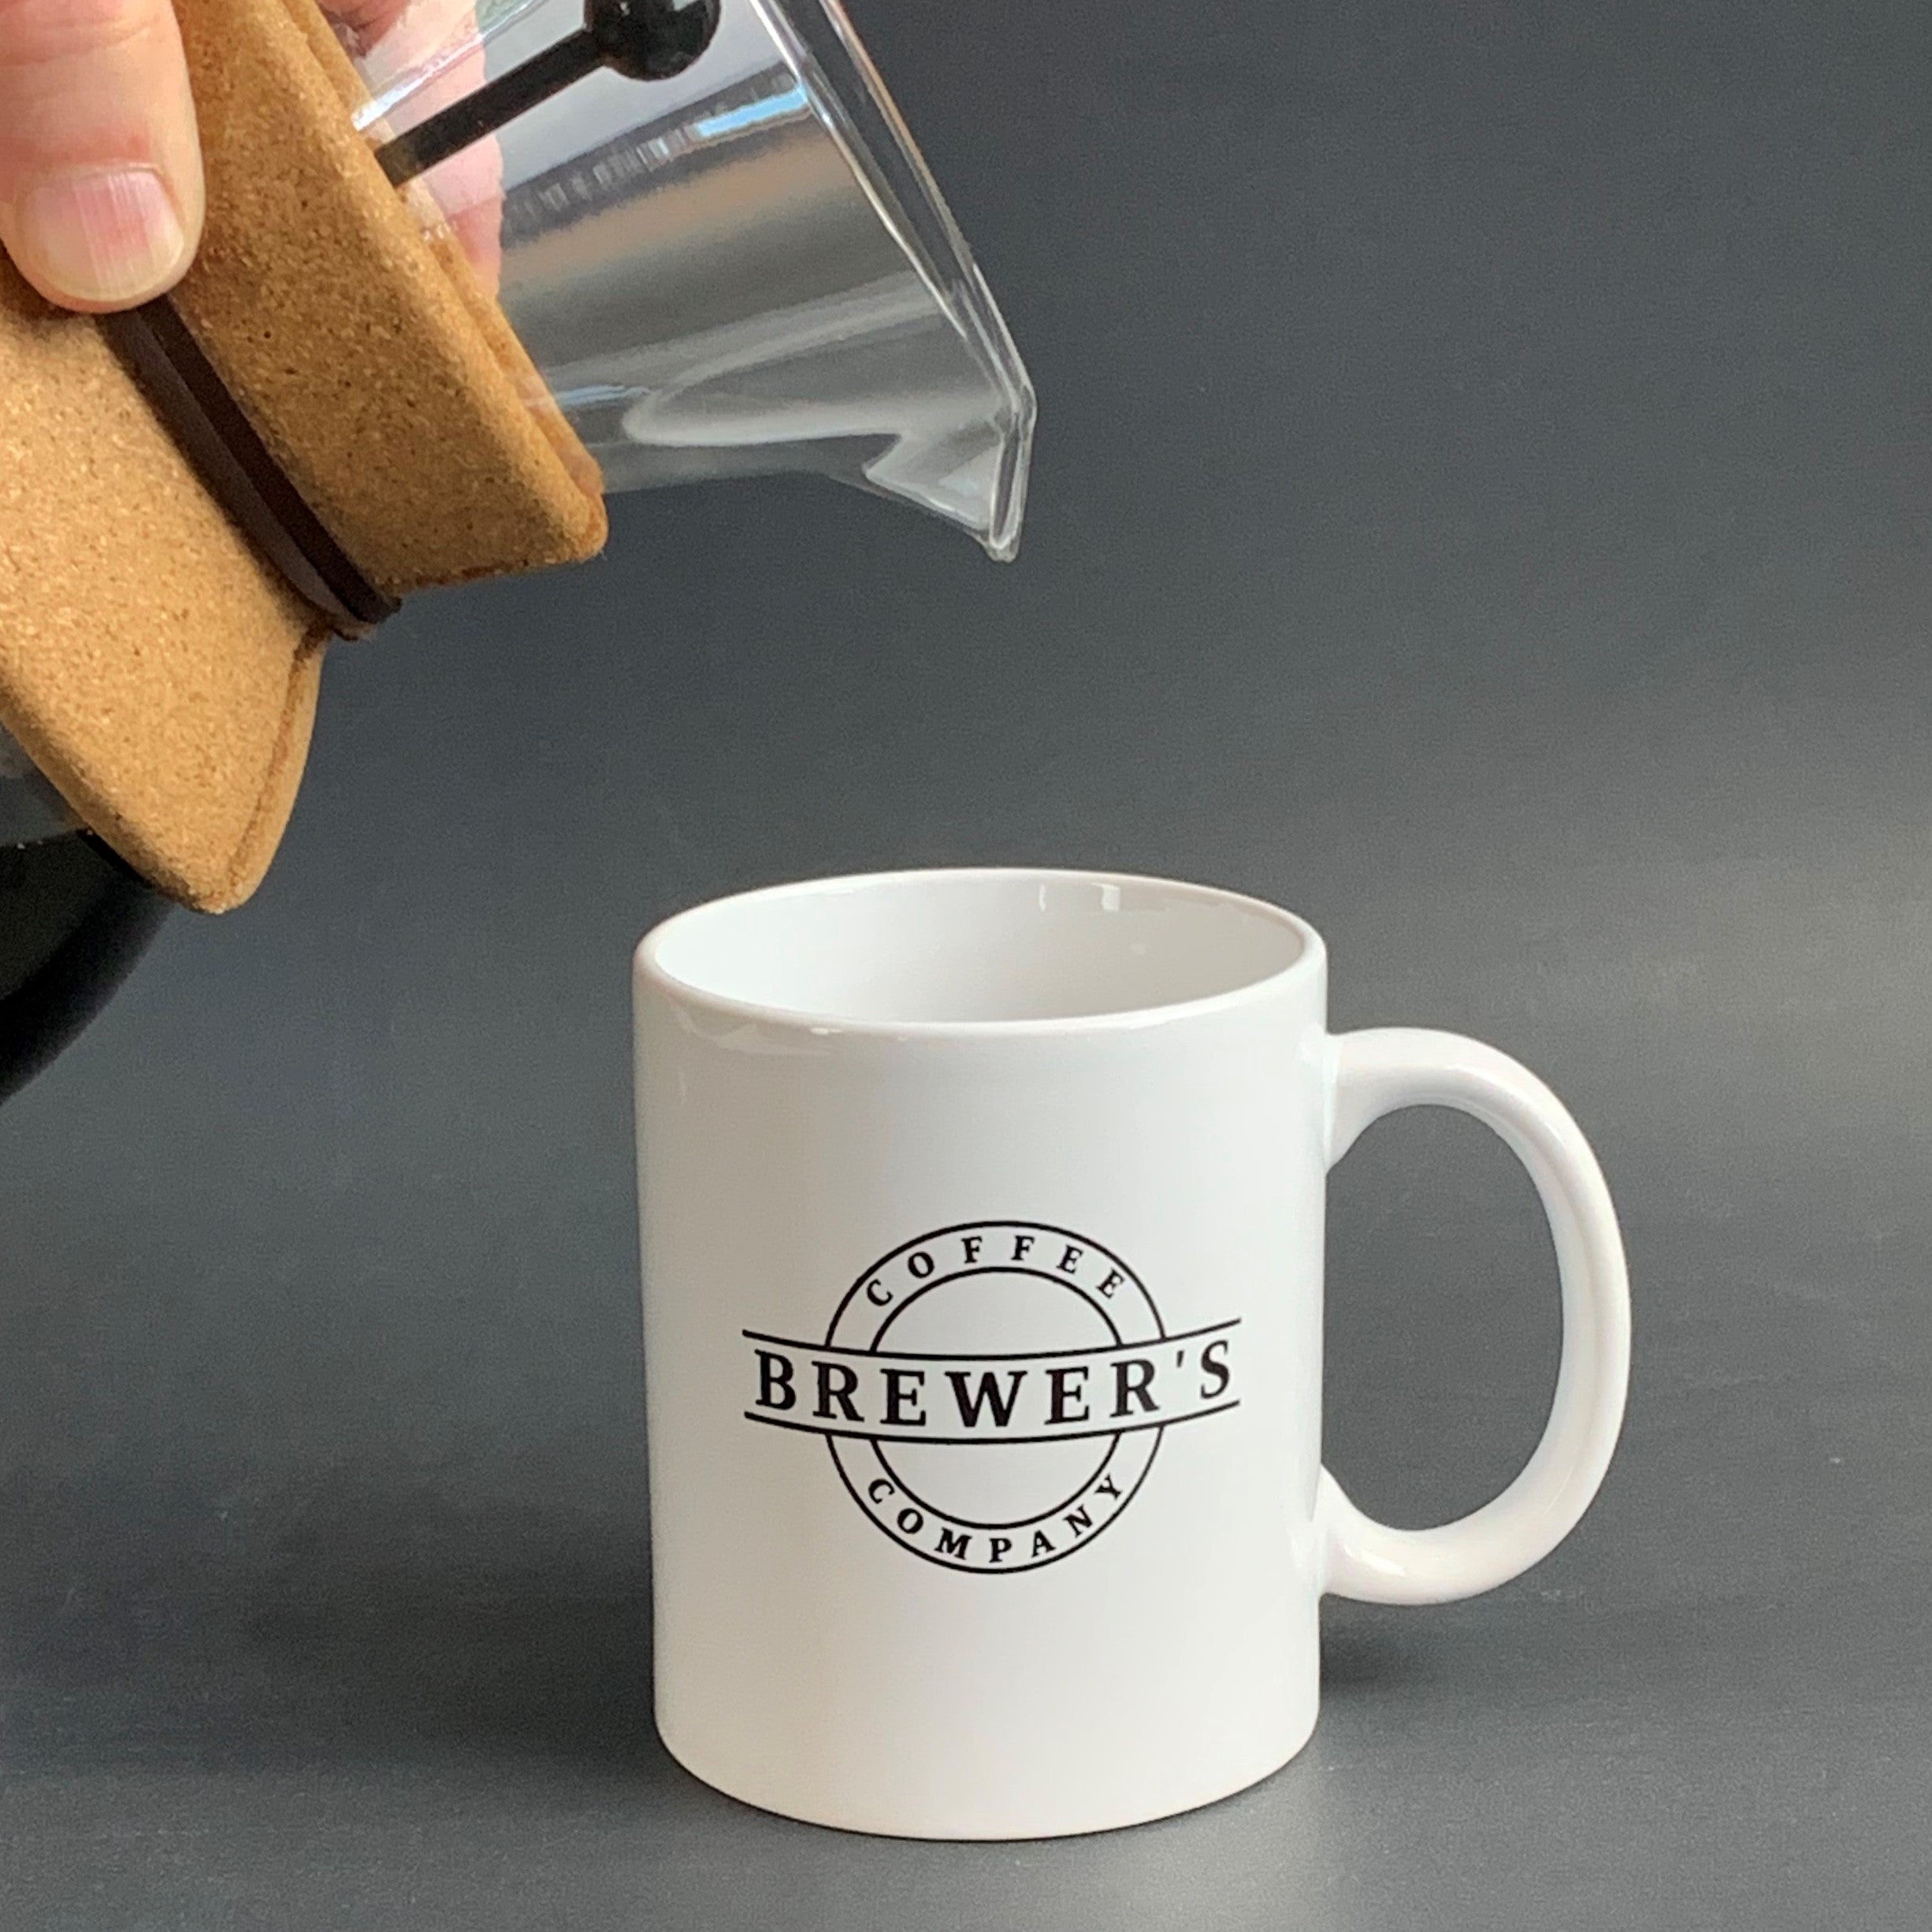 Ebern Designs Beckman Ceramic Coffee Mug